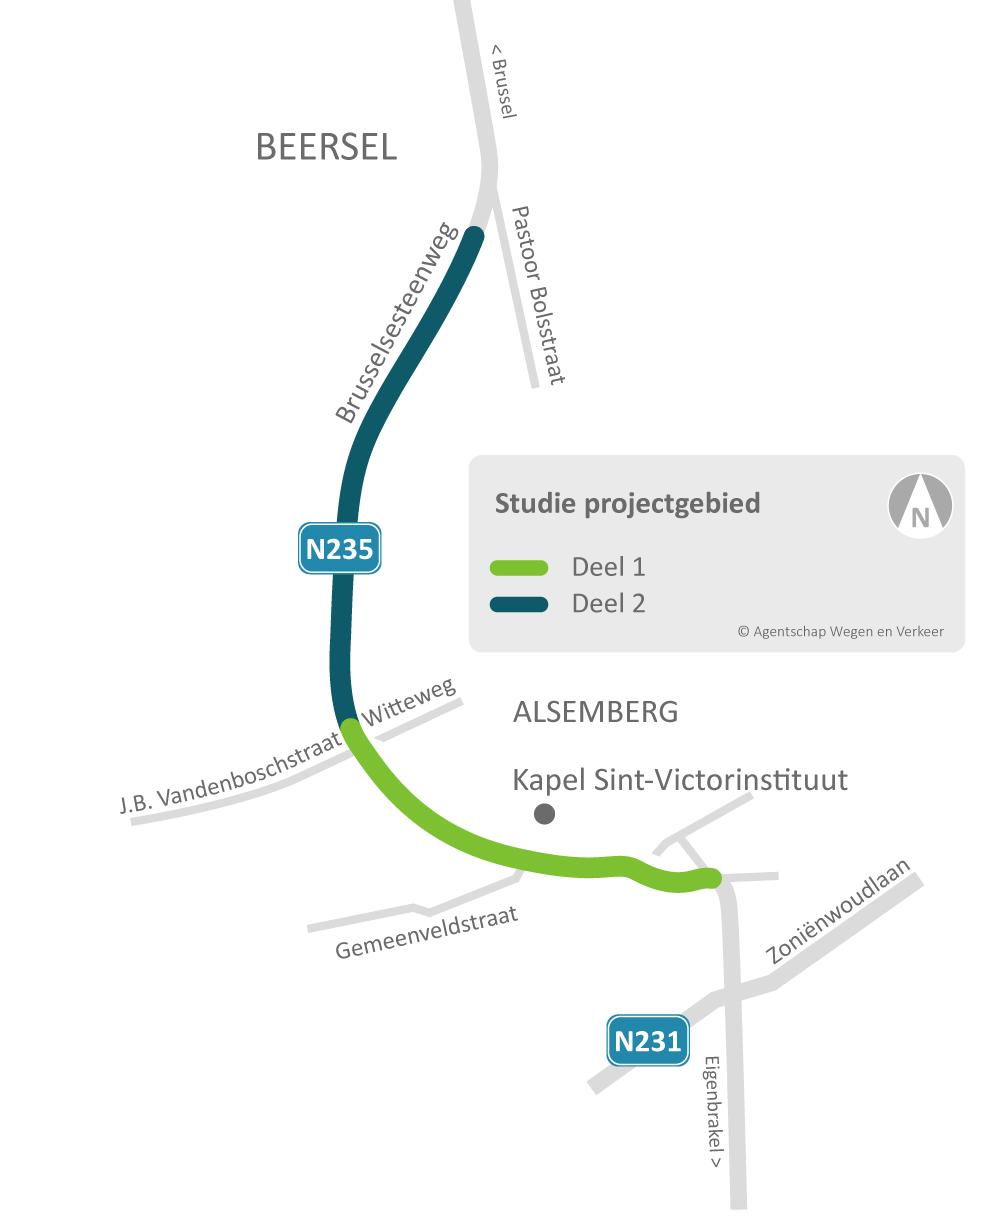 Brusselsesteenweg Beersel